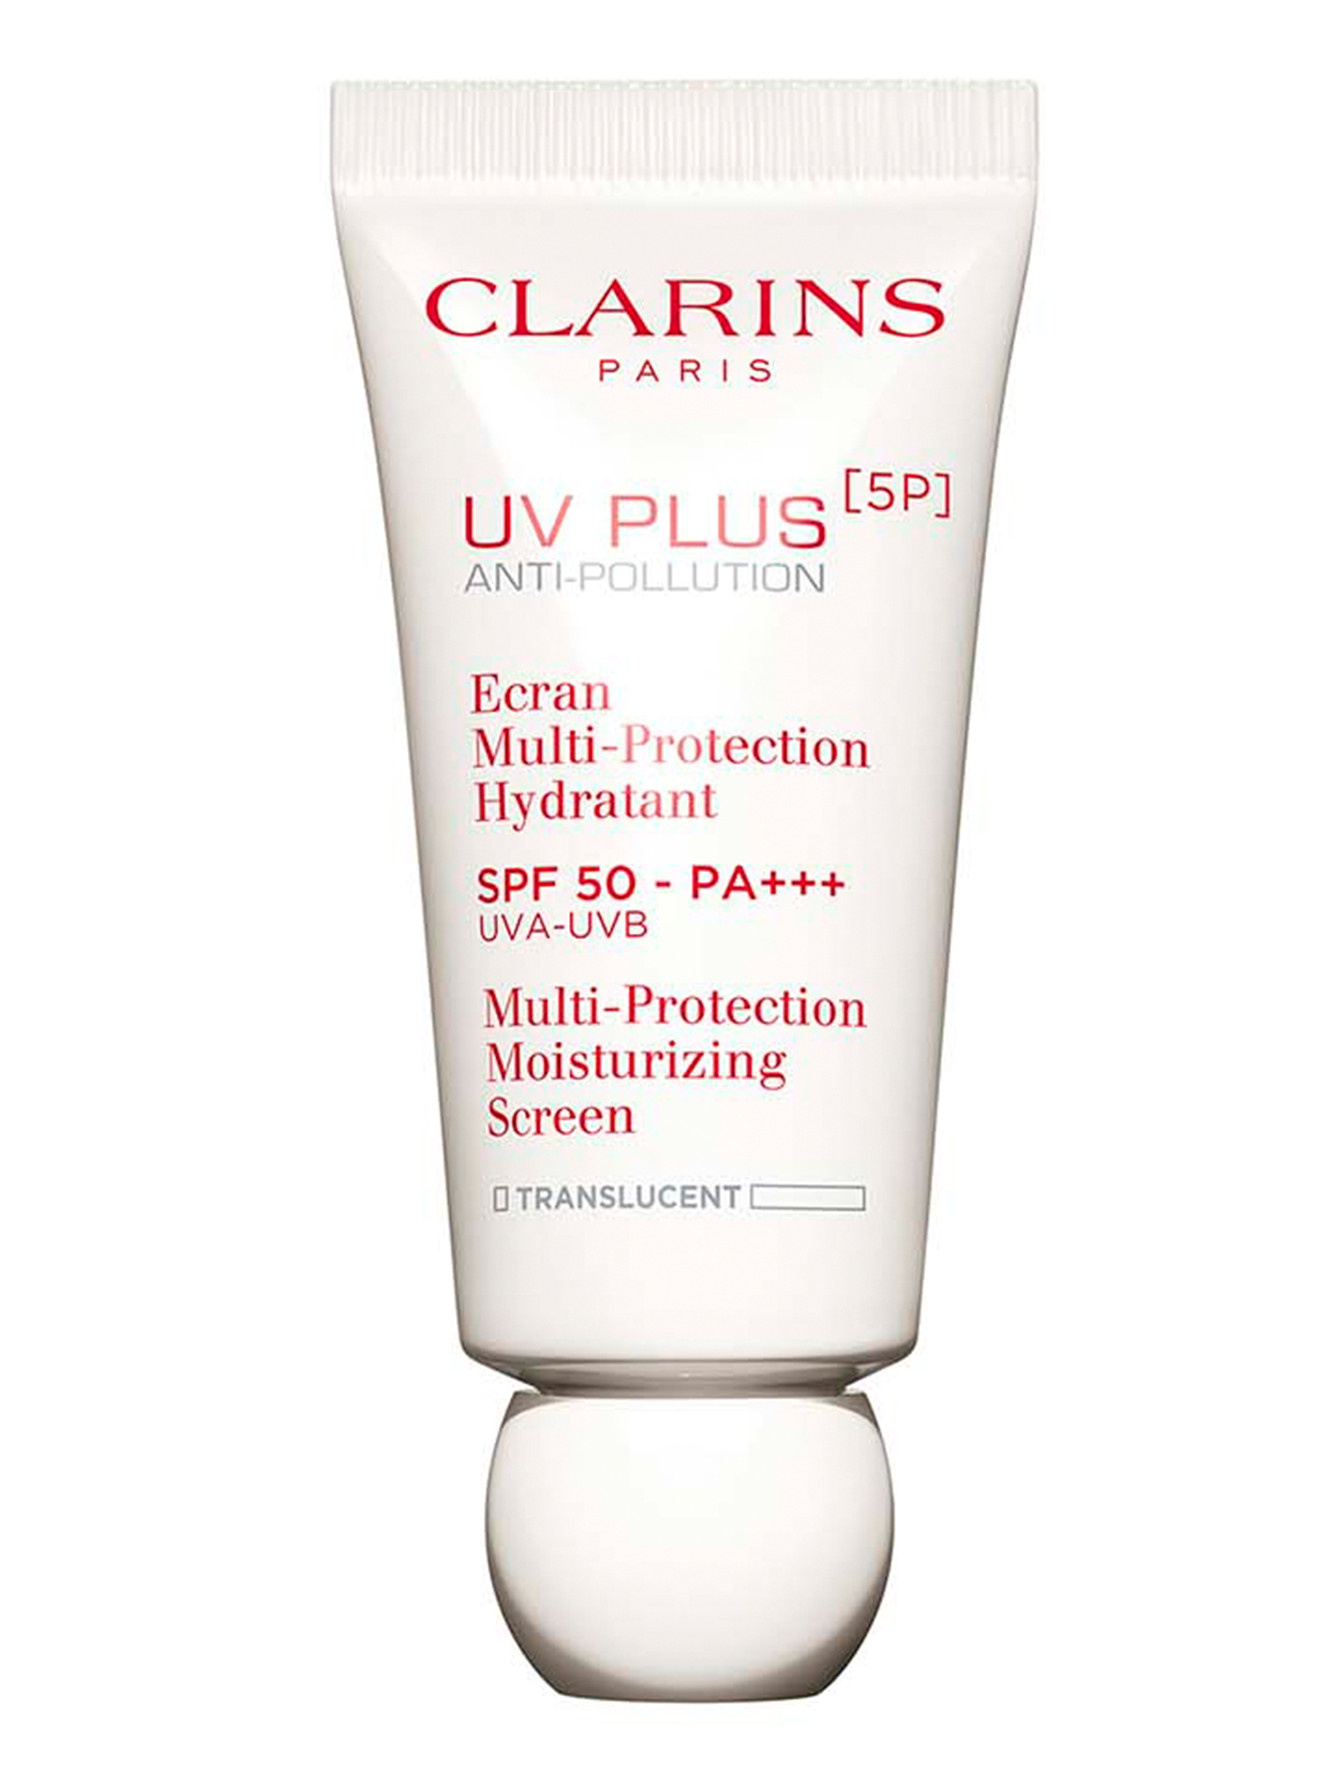 UV PLUS [5P] Anti-Pollution SPF 50 Translucent Увлажняющий защитный флюид-экран для лица 30 мл - Общий вид